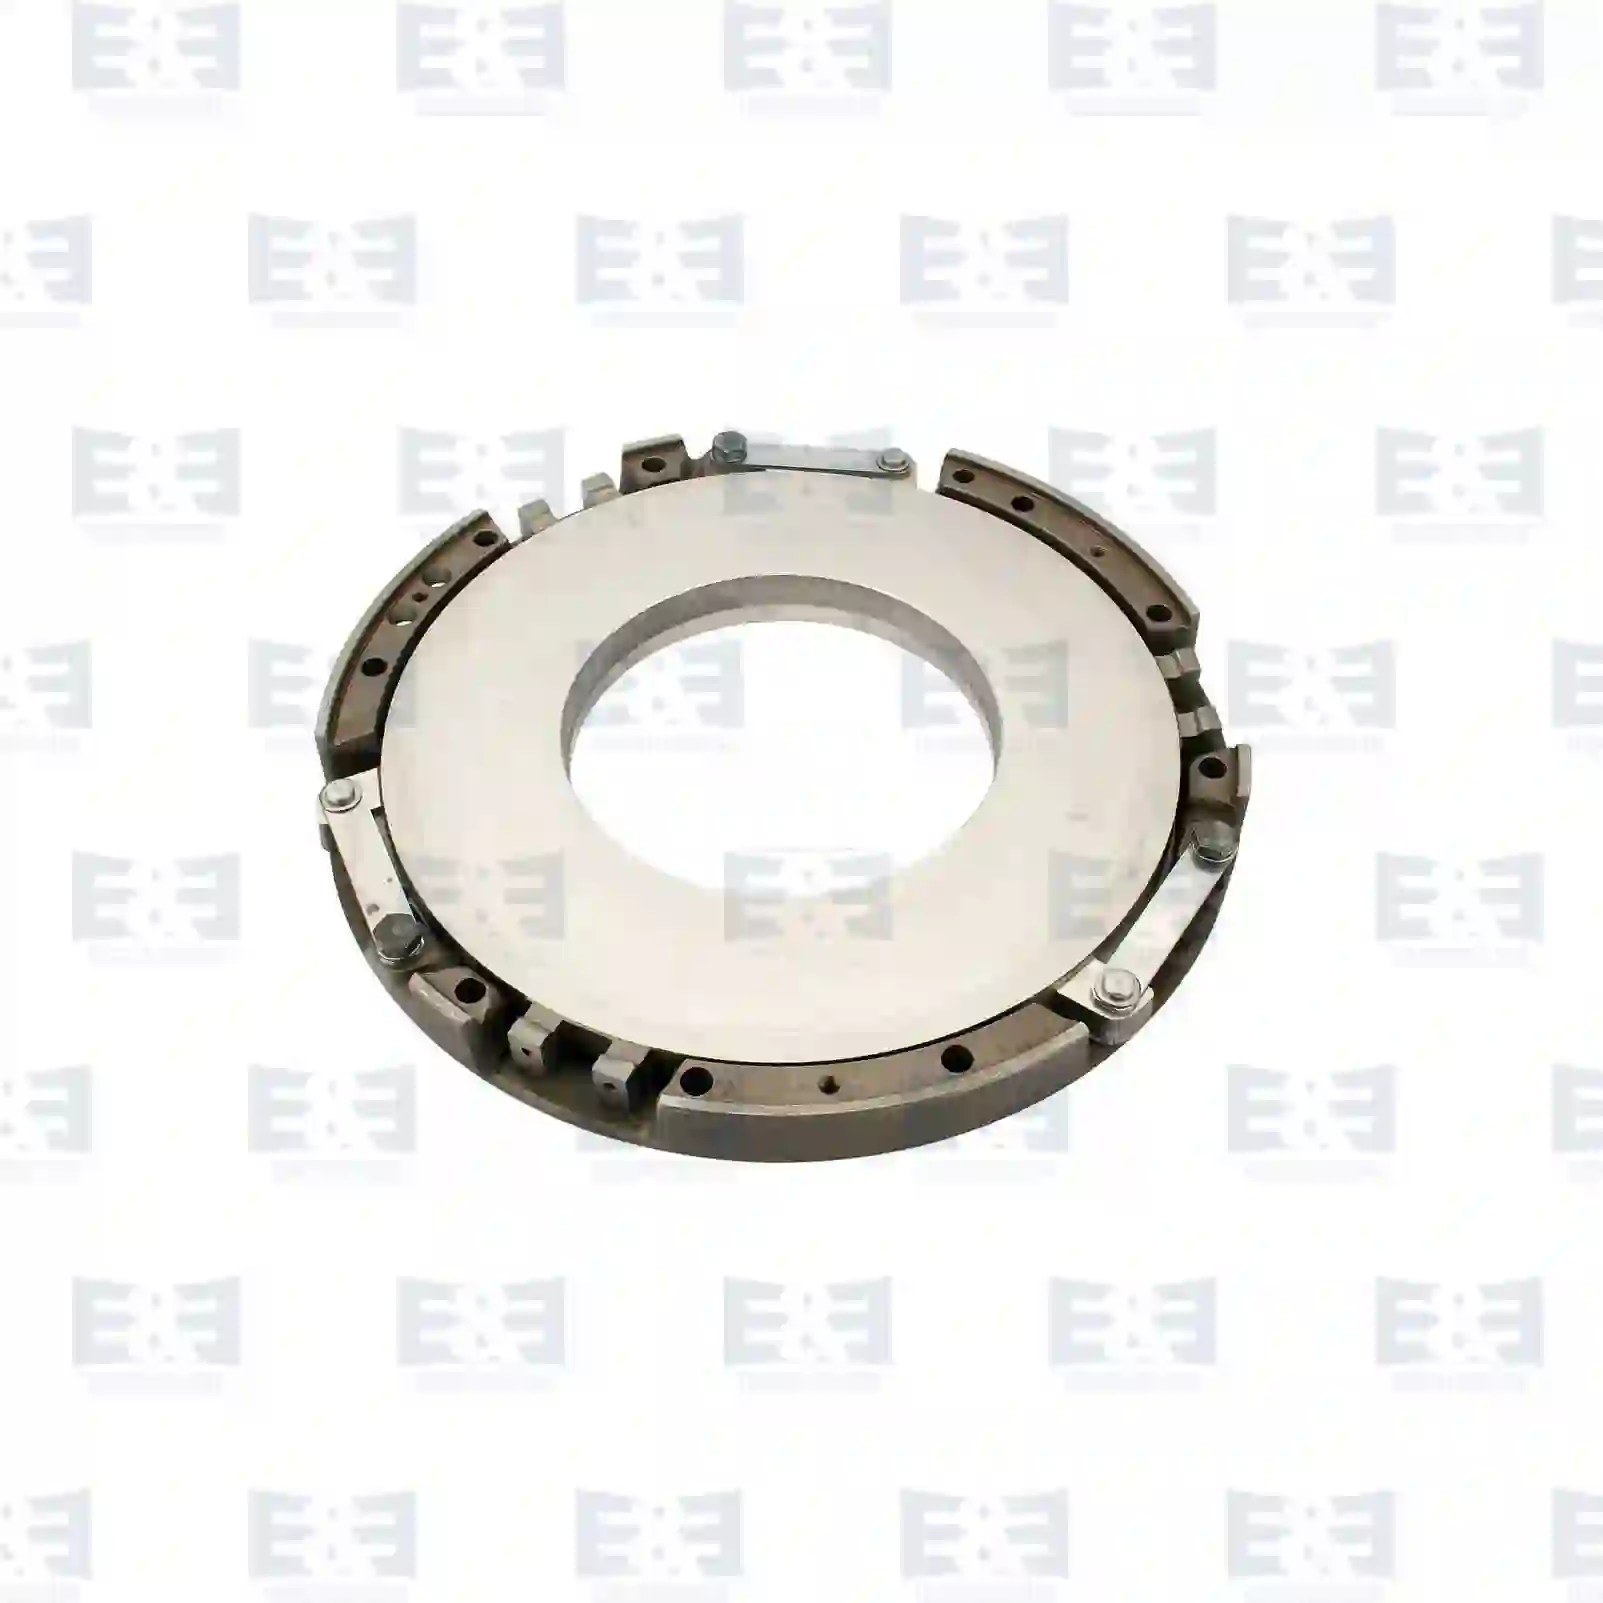  Intermediate ring || E&E Truck Spare Parts | Truck Spare Parts, Auotomotive Spare Parts